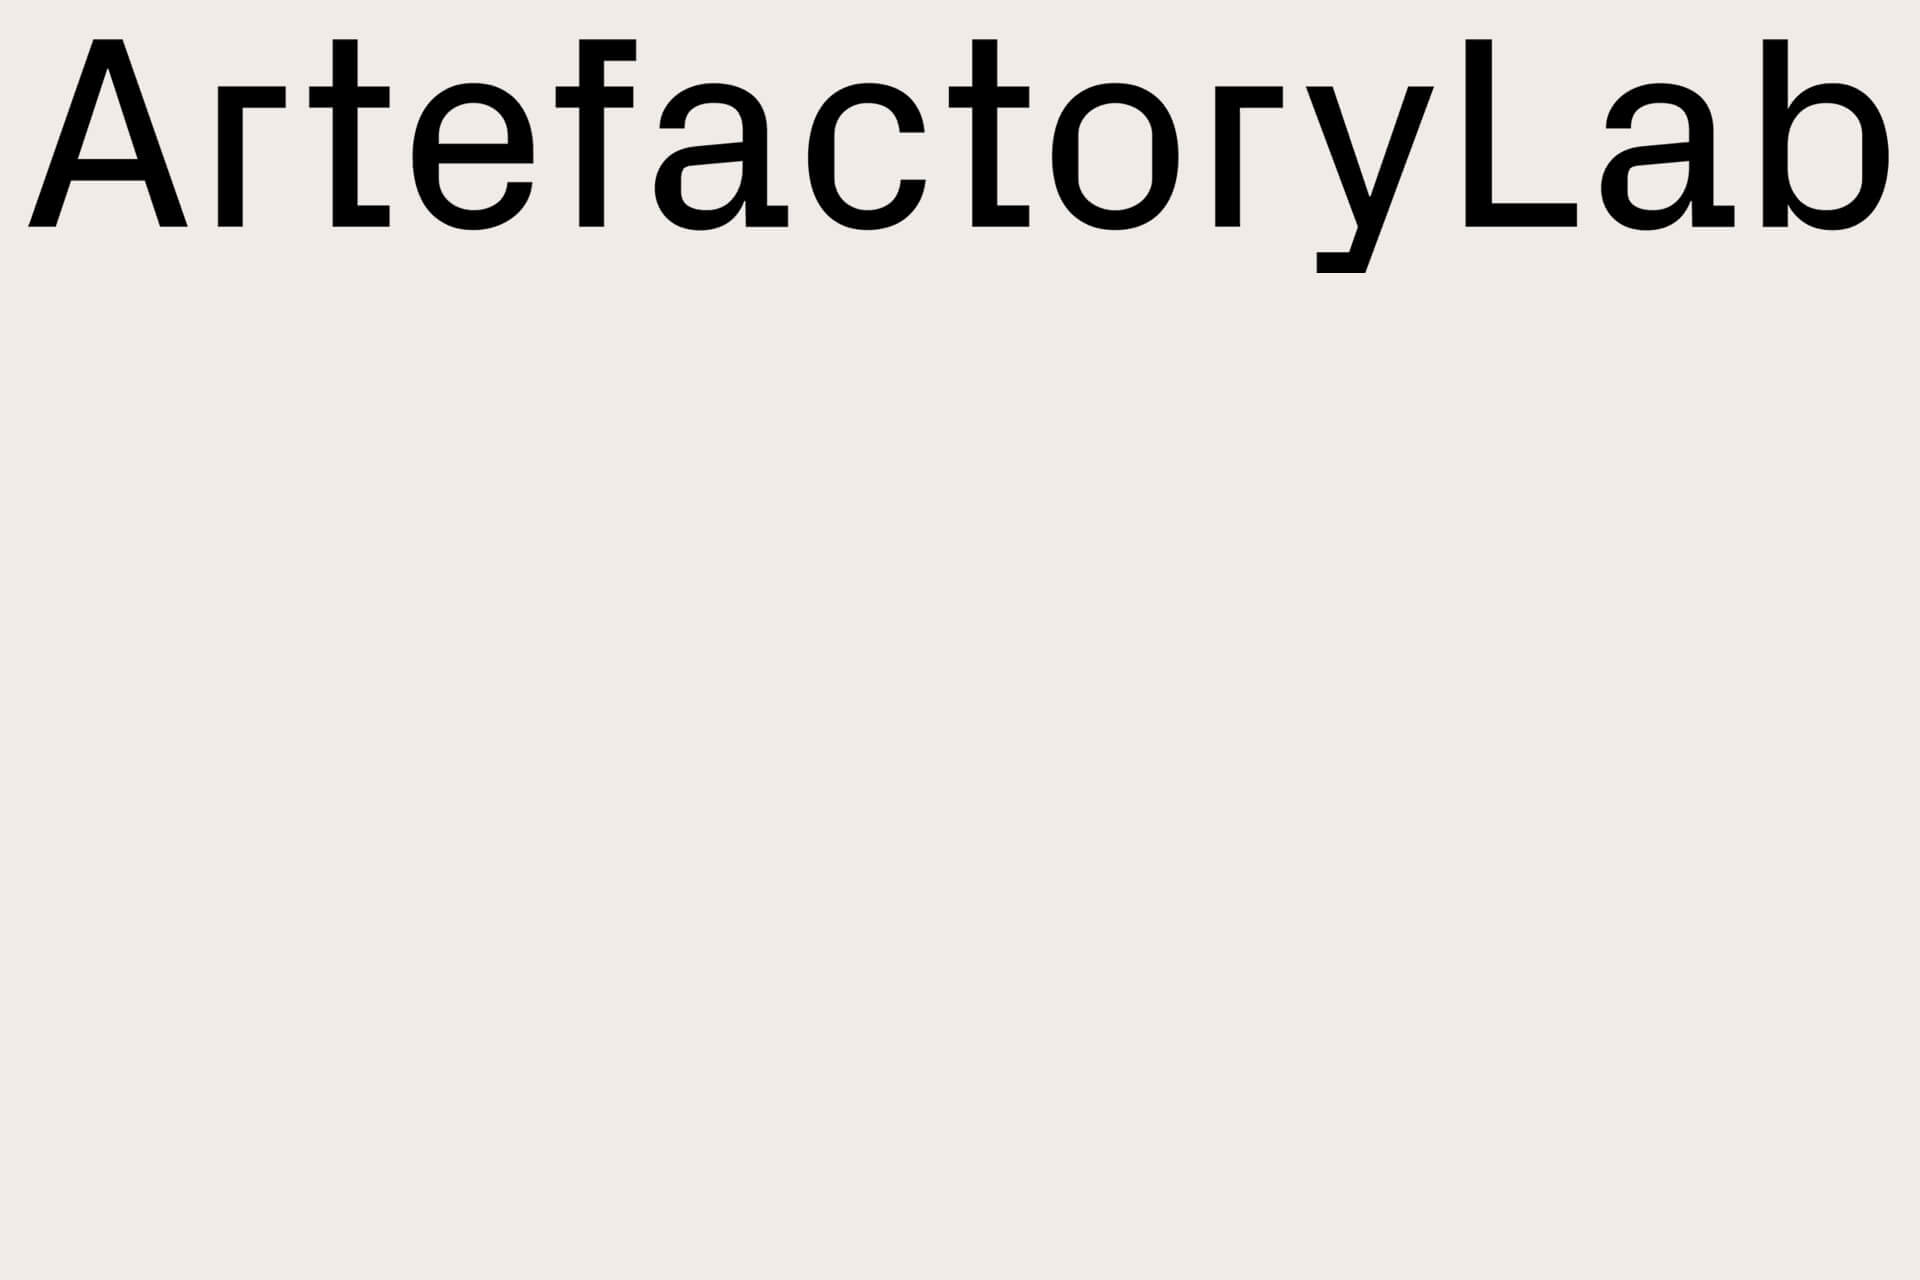 artefactorylab-web-graphisme-architecture-Plastac